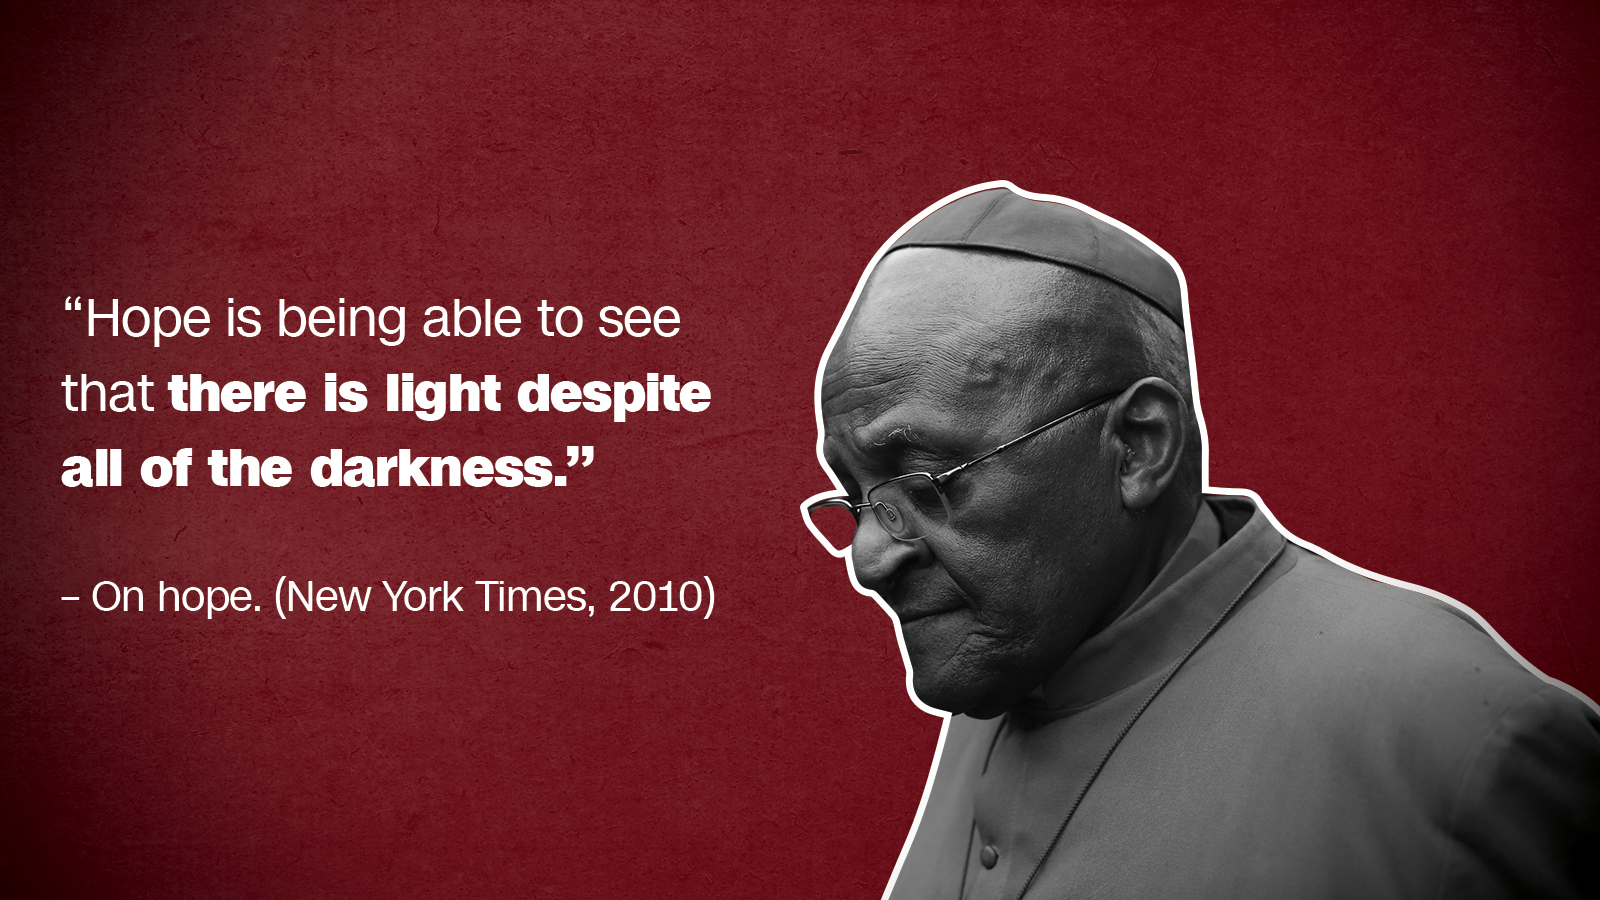 Desmond Tutu, in his own words